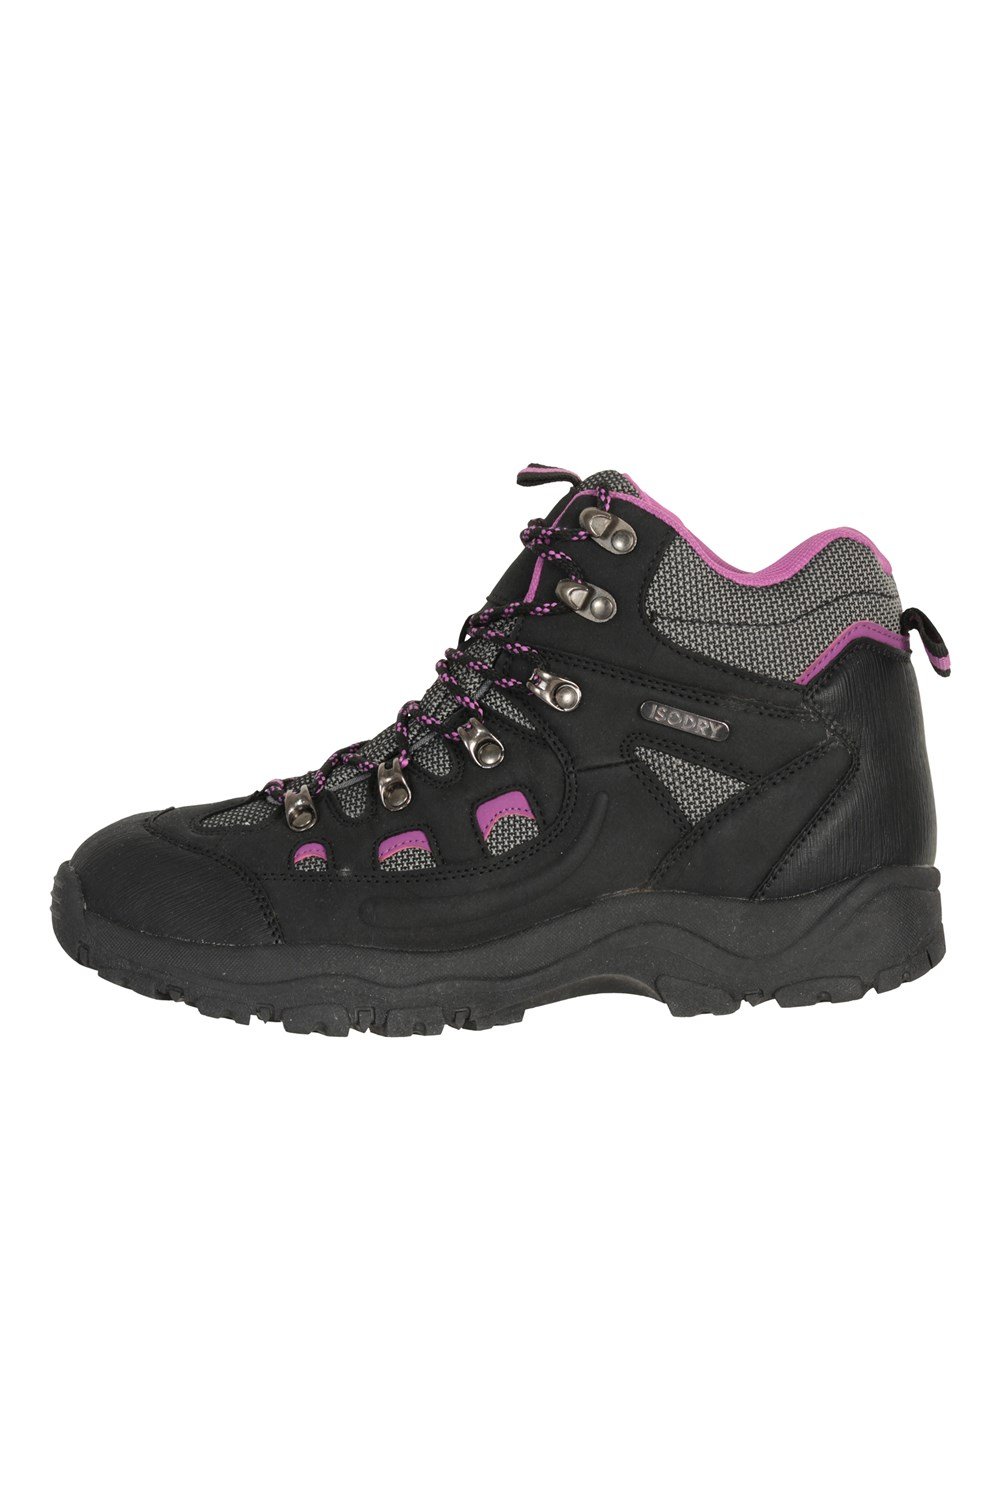 miniature 25 - Mountain Warehouse Womens Waterproof Hiking Boots Walking Trekking Ladies Boot